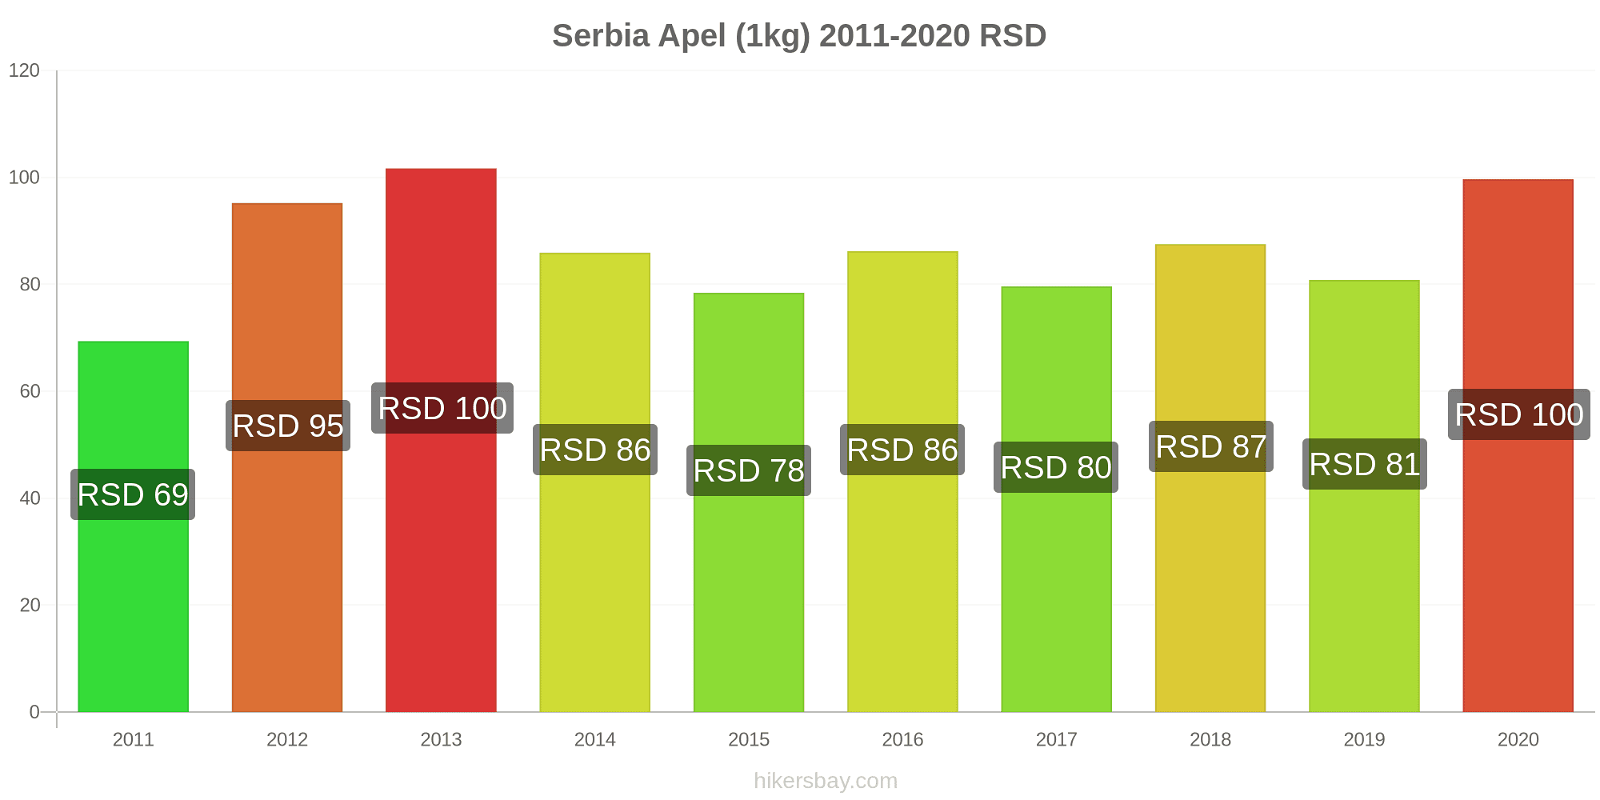 Serbia perubahan harga Apel (1kg) hikersbay.com